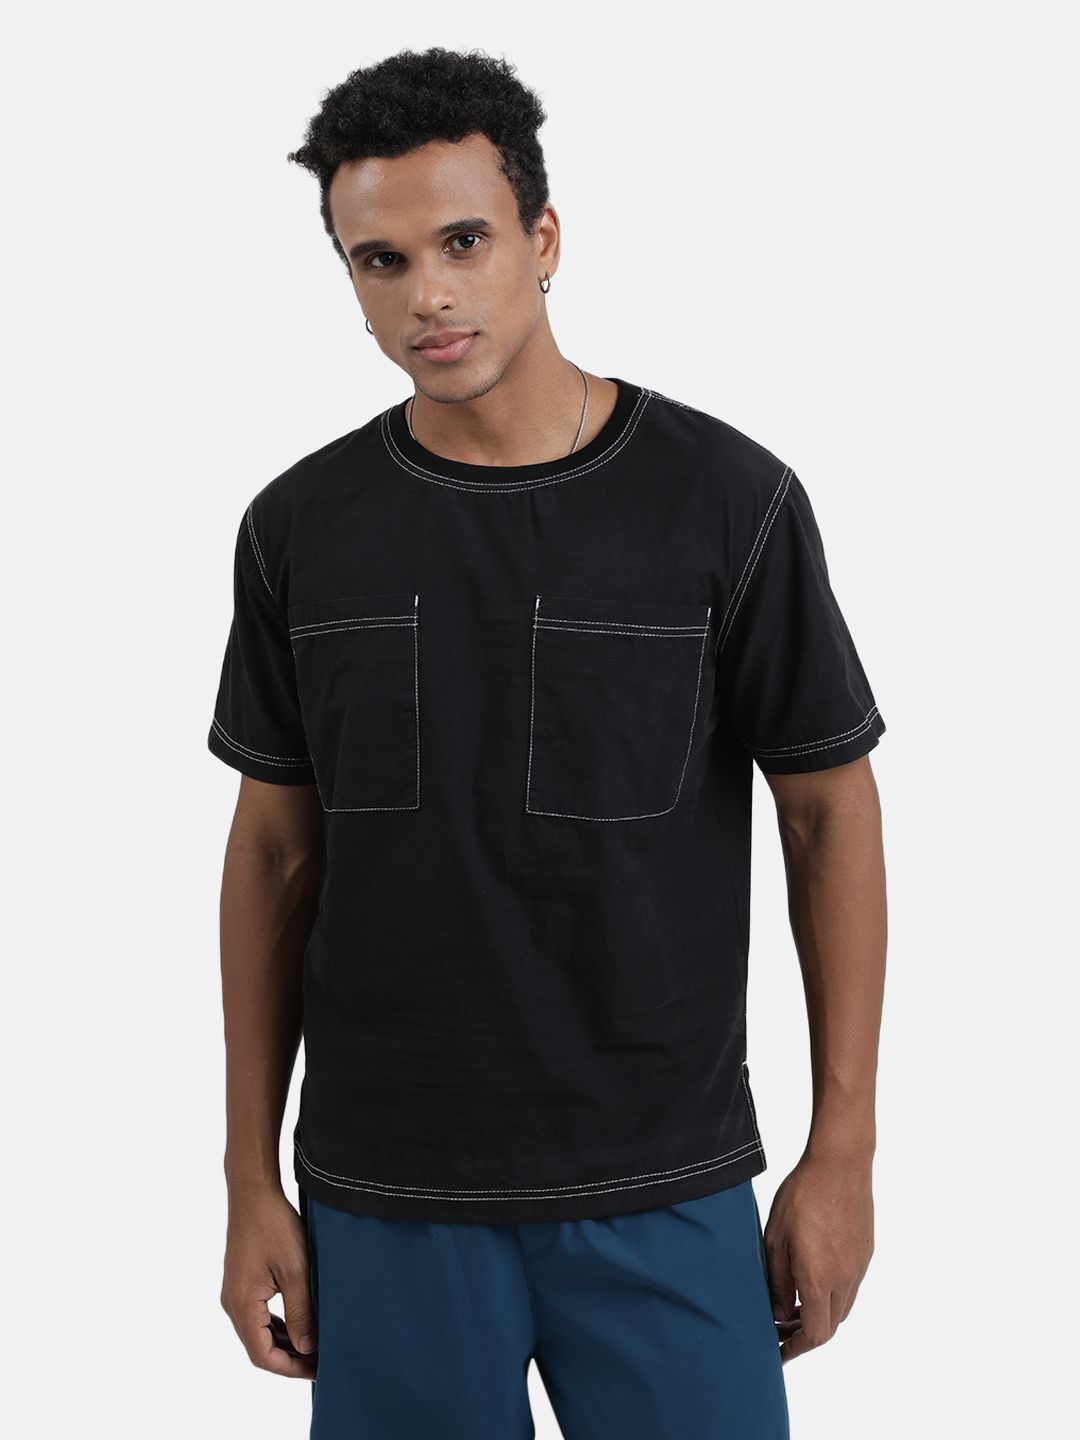     			Bene Kleed 100% Cotton Regular Fit Solids Half Sleeves Men's Casual Shirt - Black ( Pack of 1 )